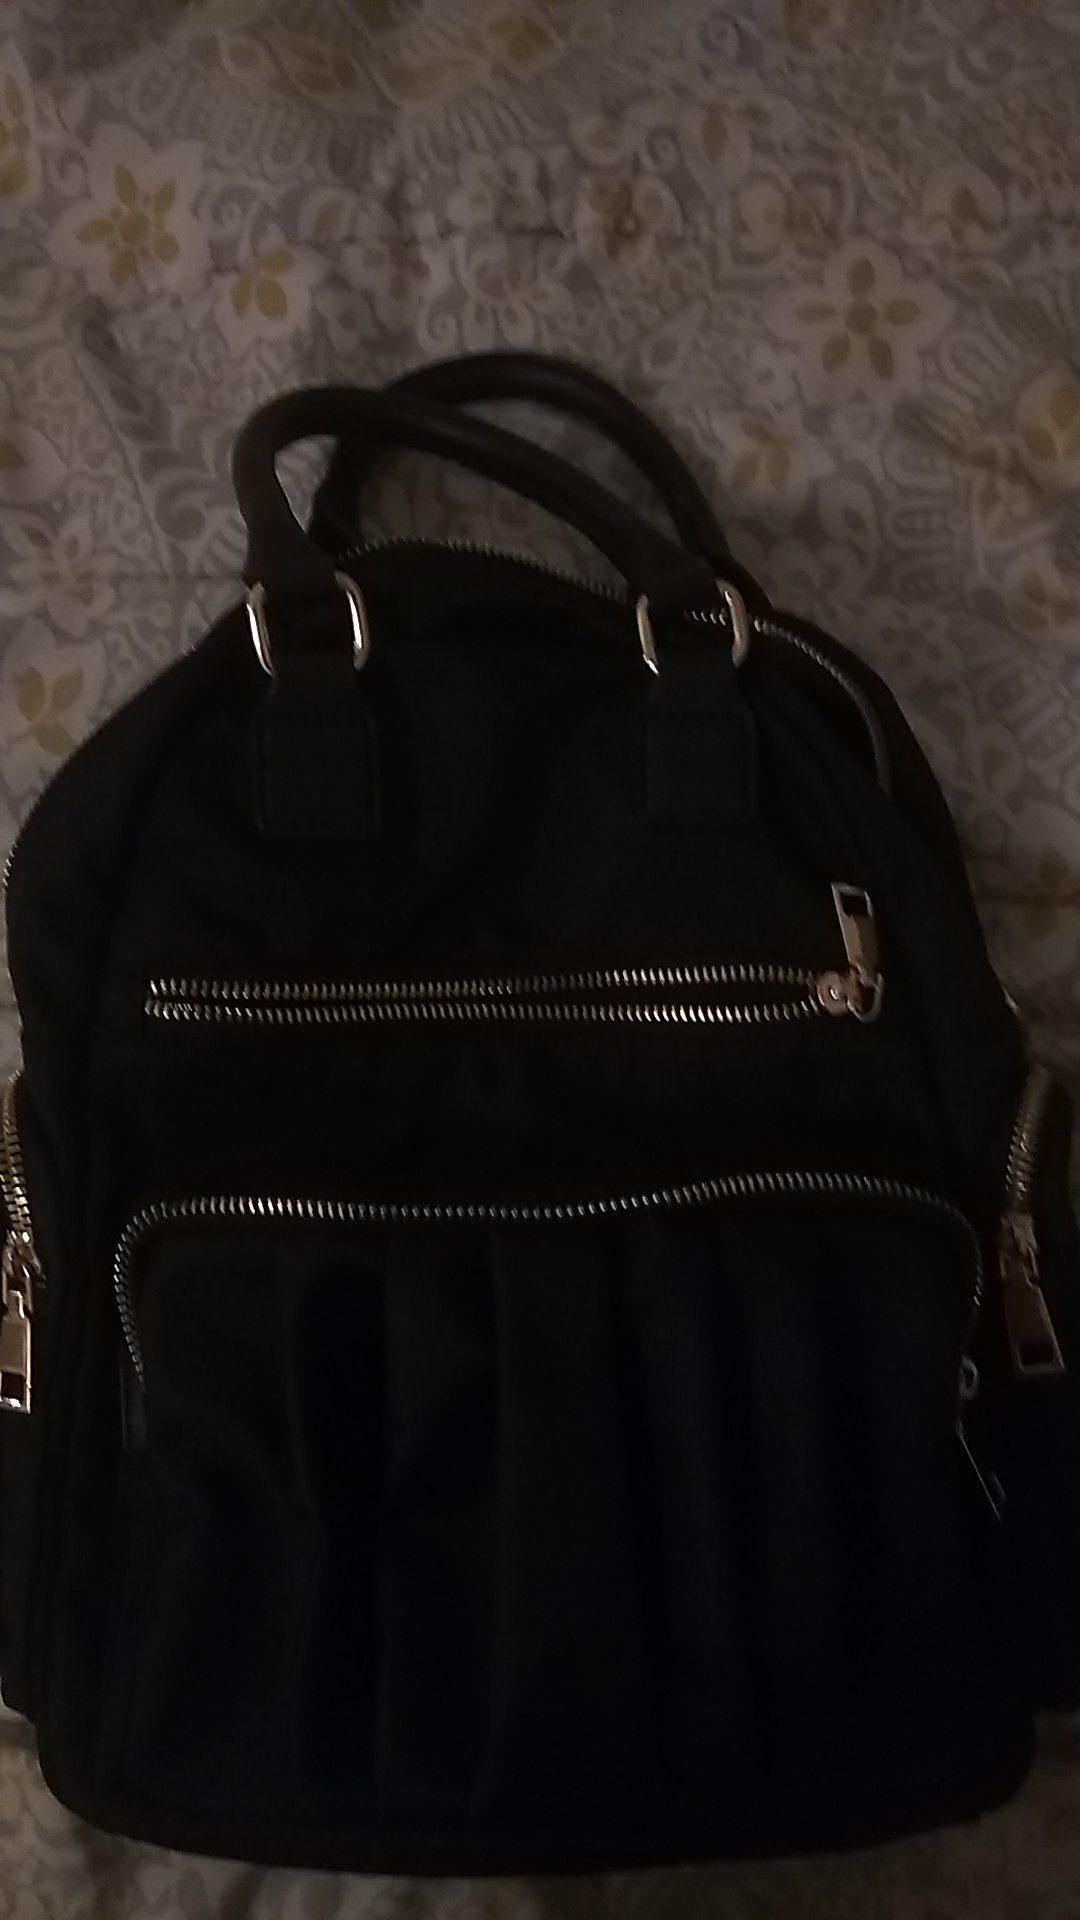 Black backpack/purse